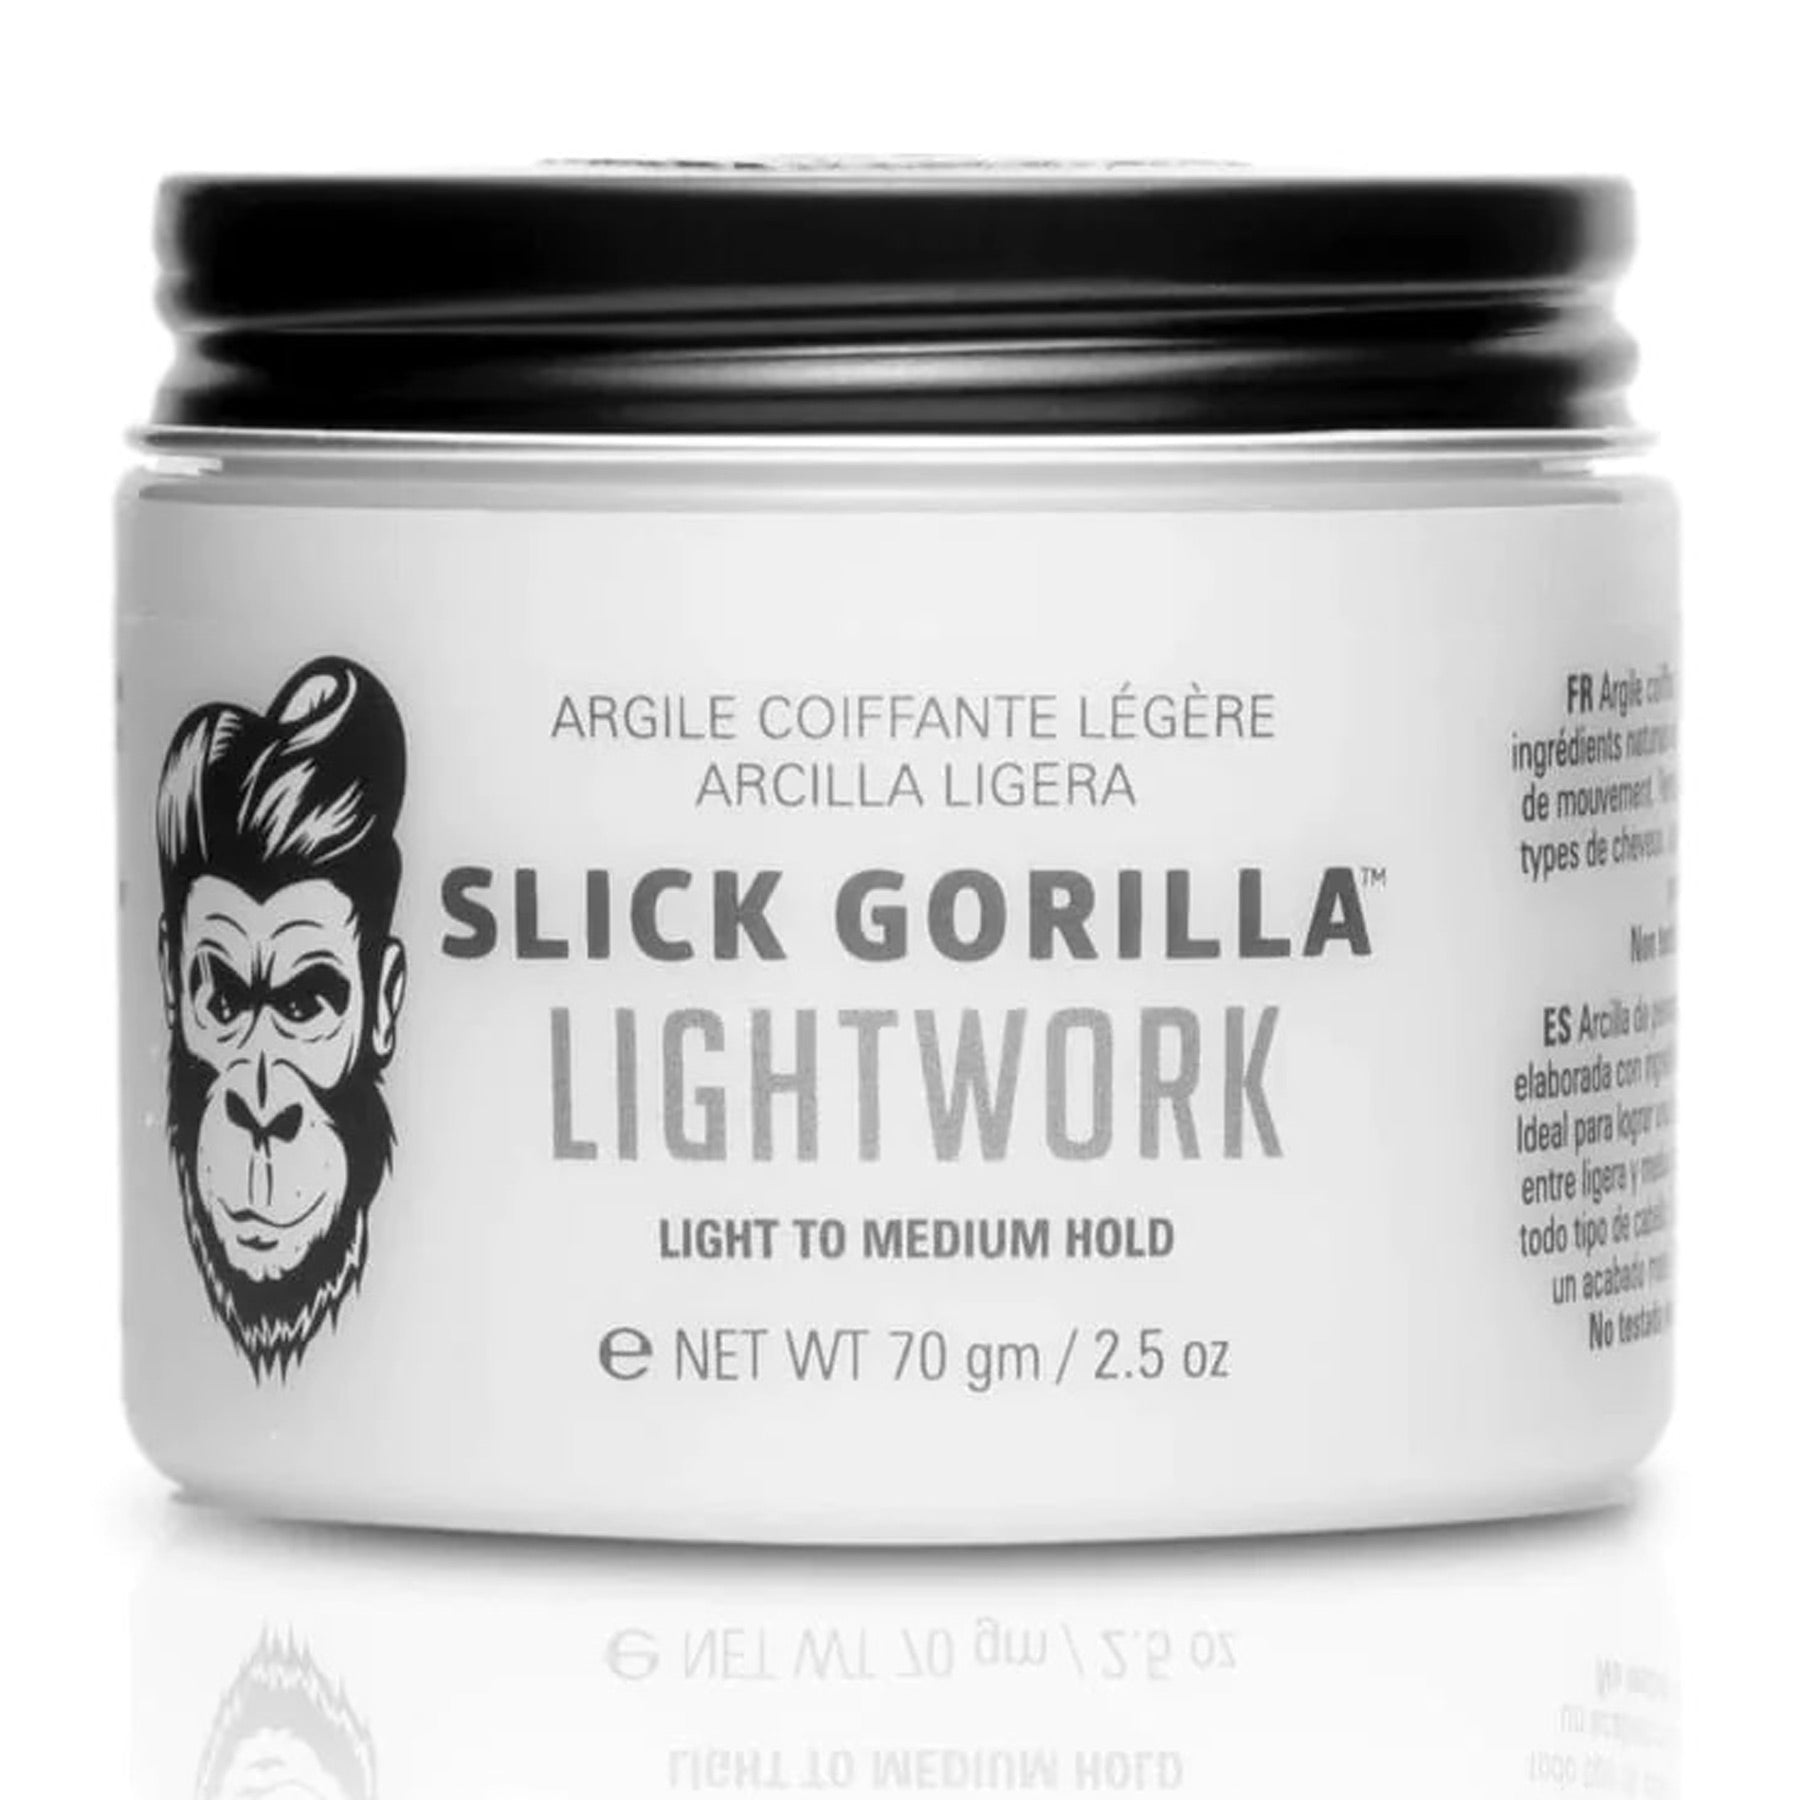 Slick Gorilla lightwork